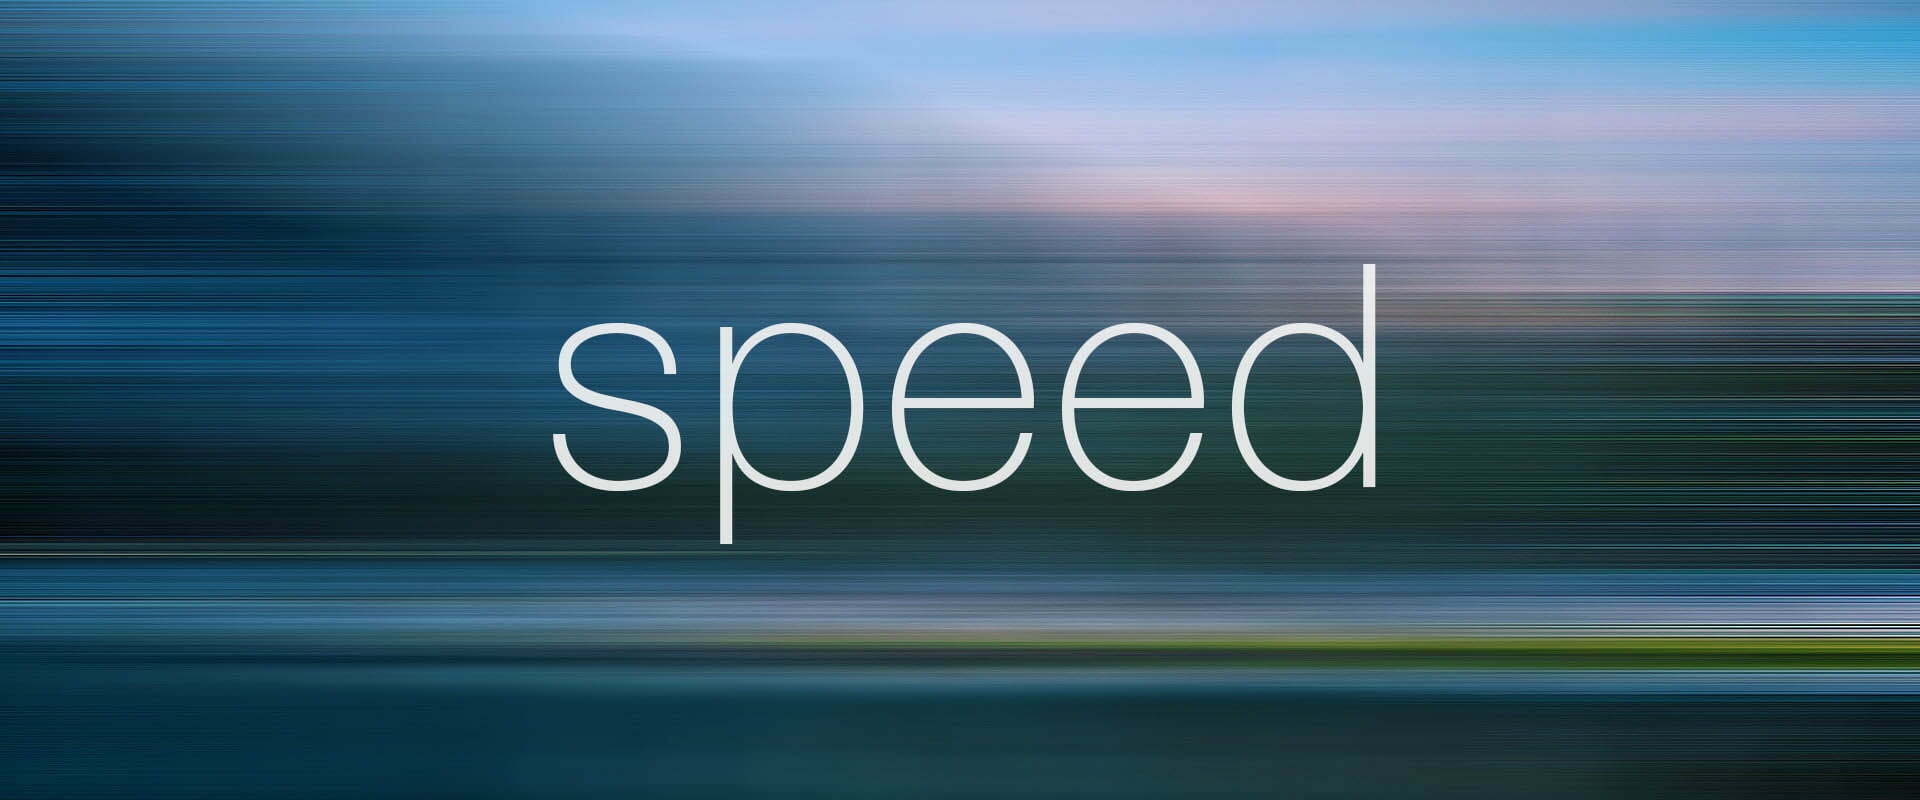  Speed